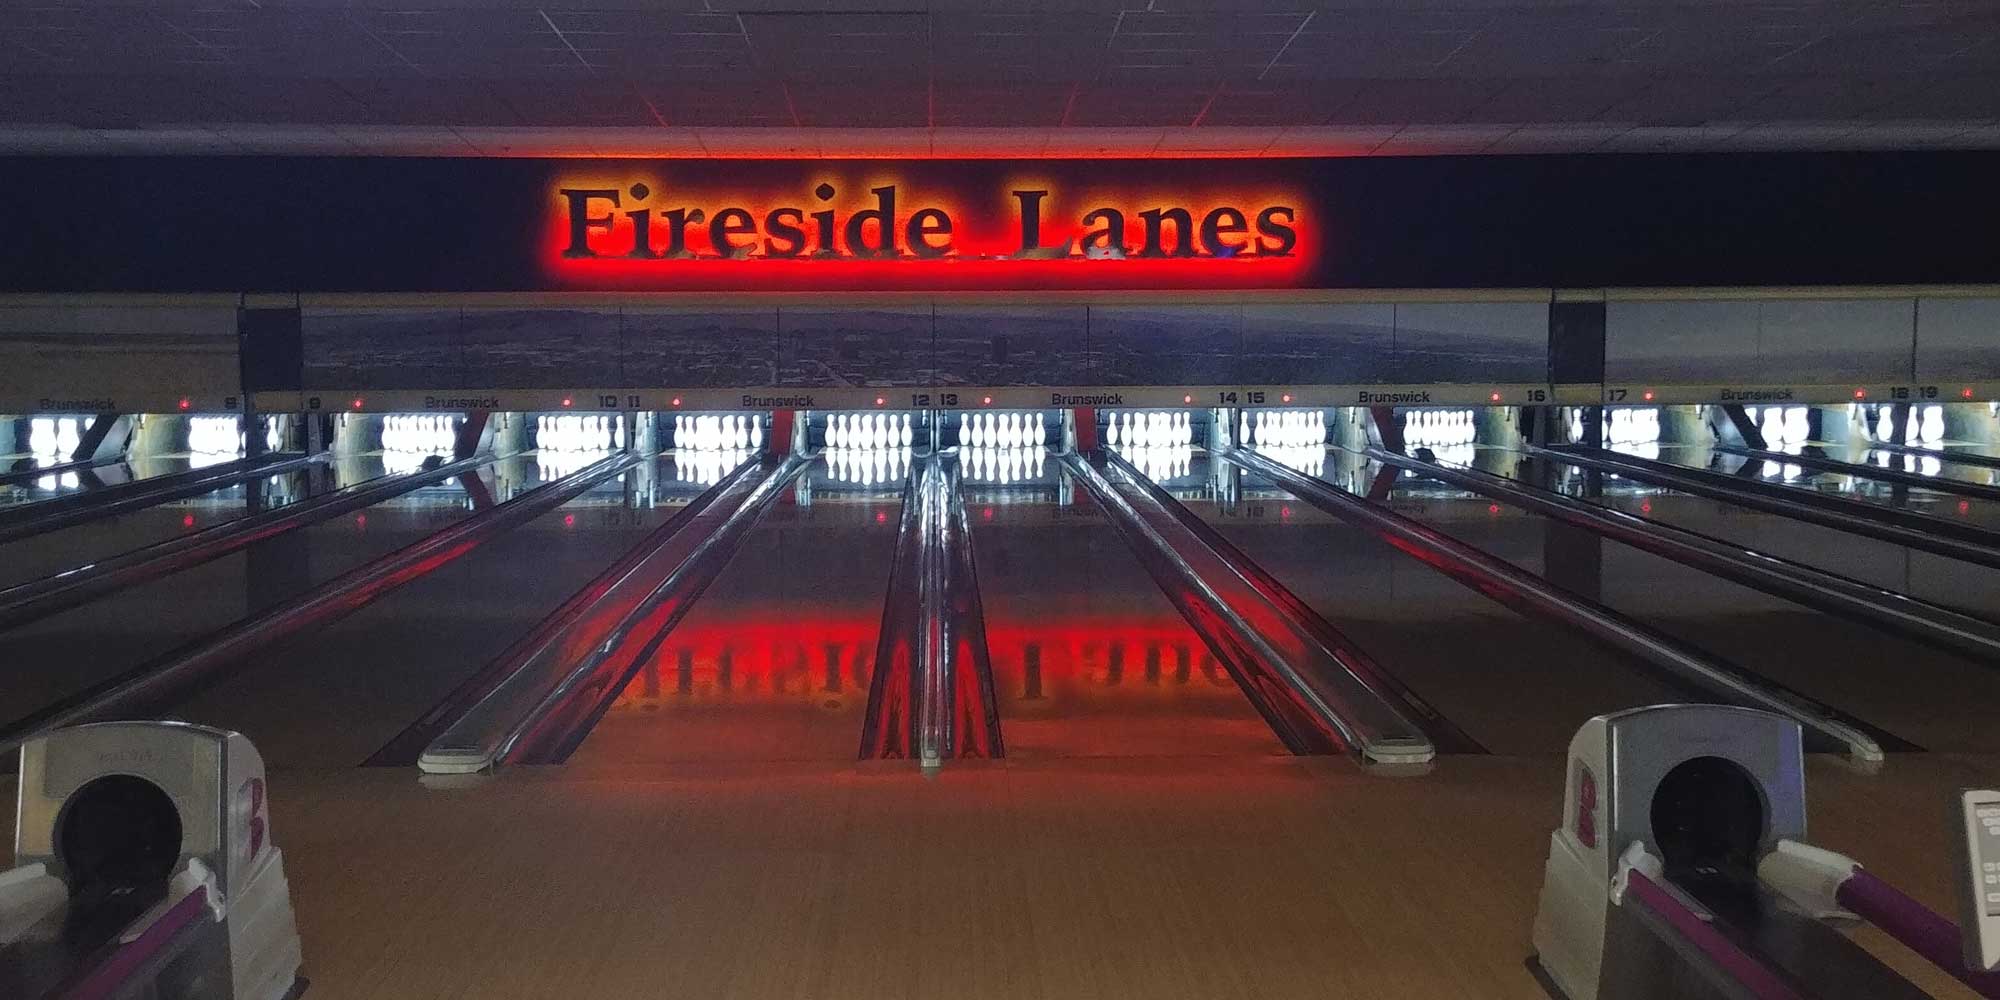 northend bowling alley gang fireside lanes wichita ks